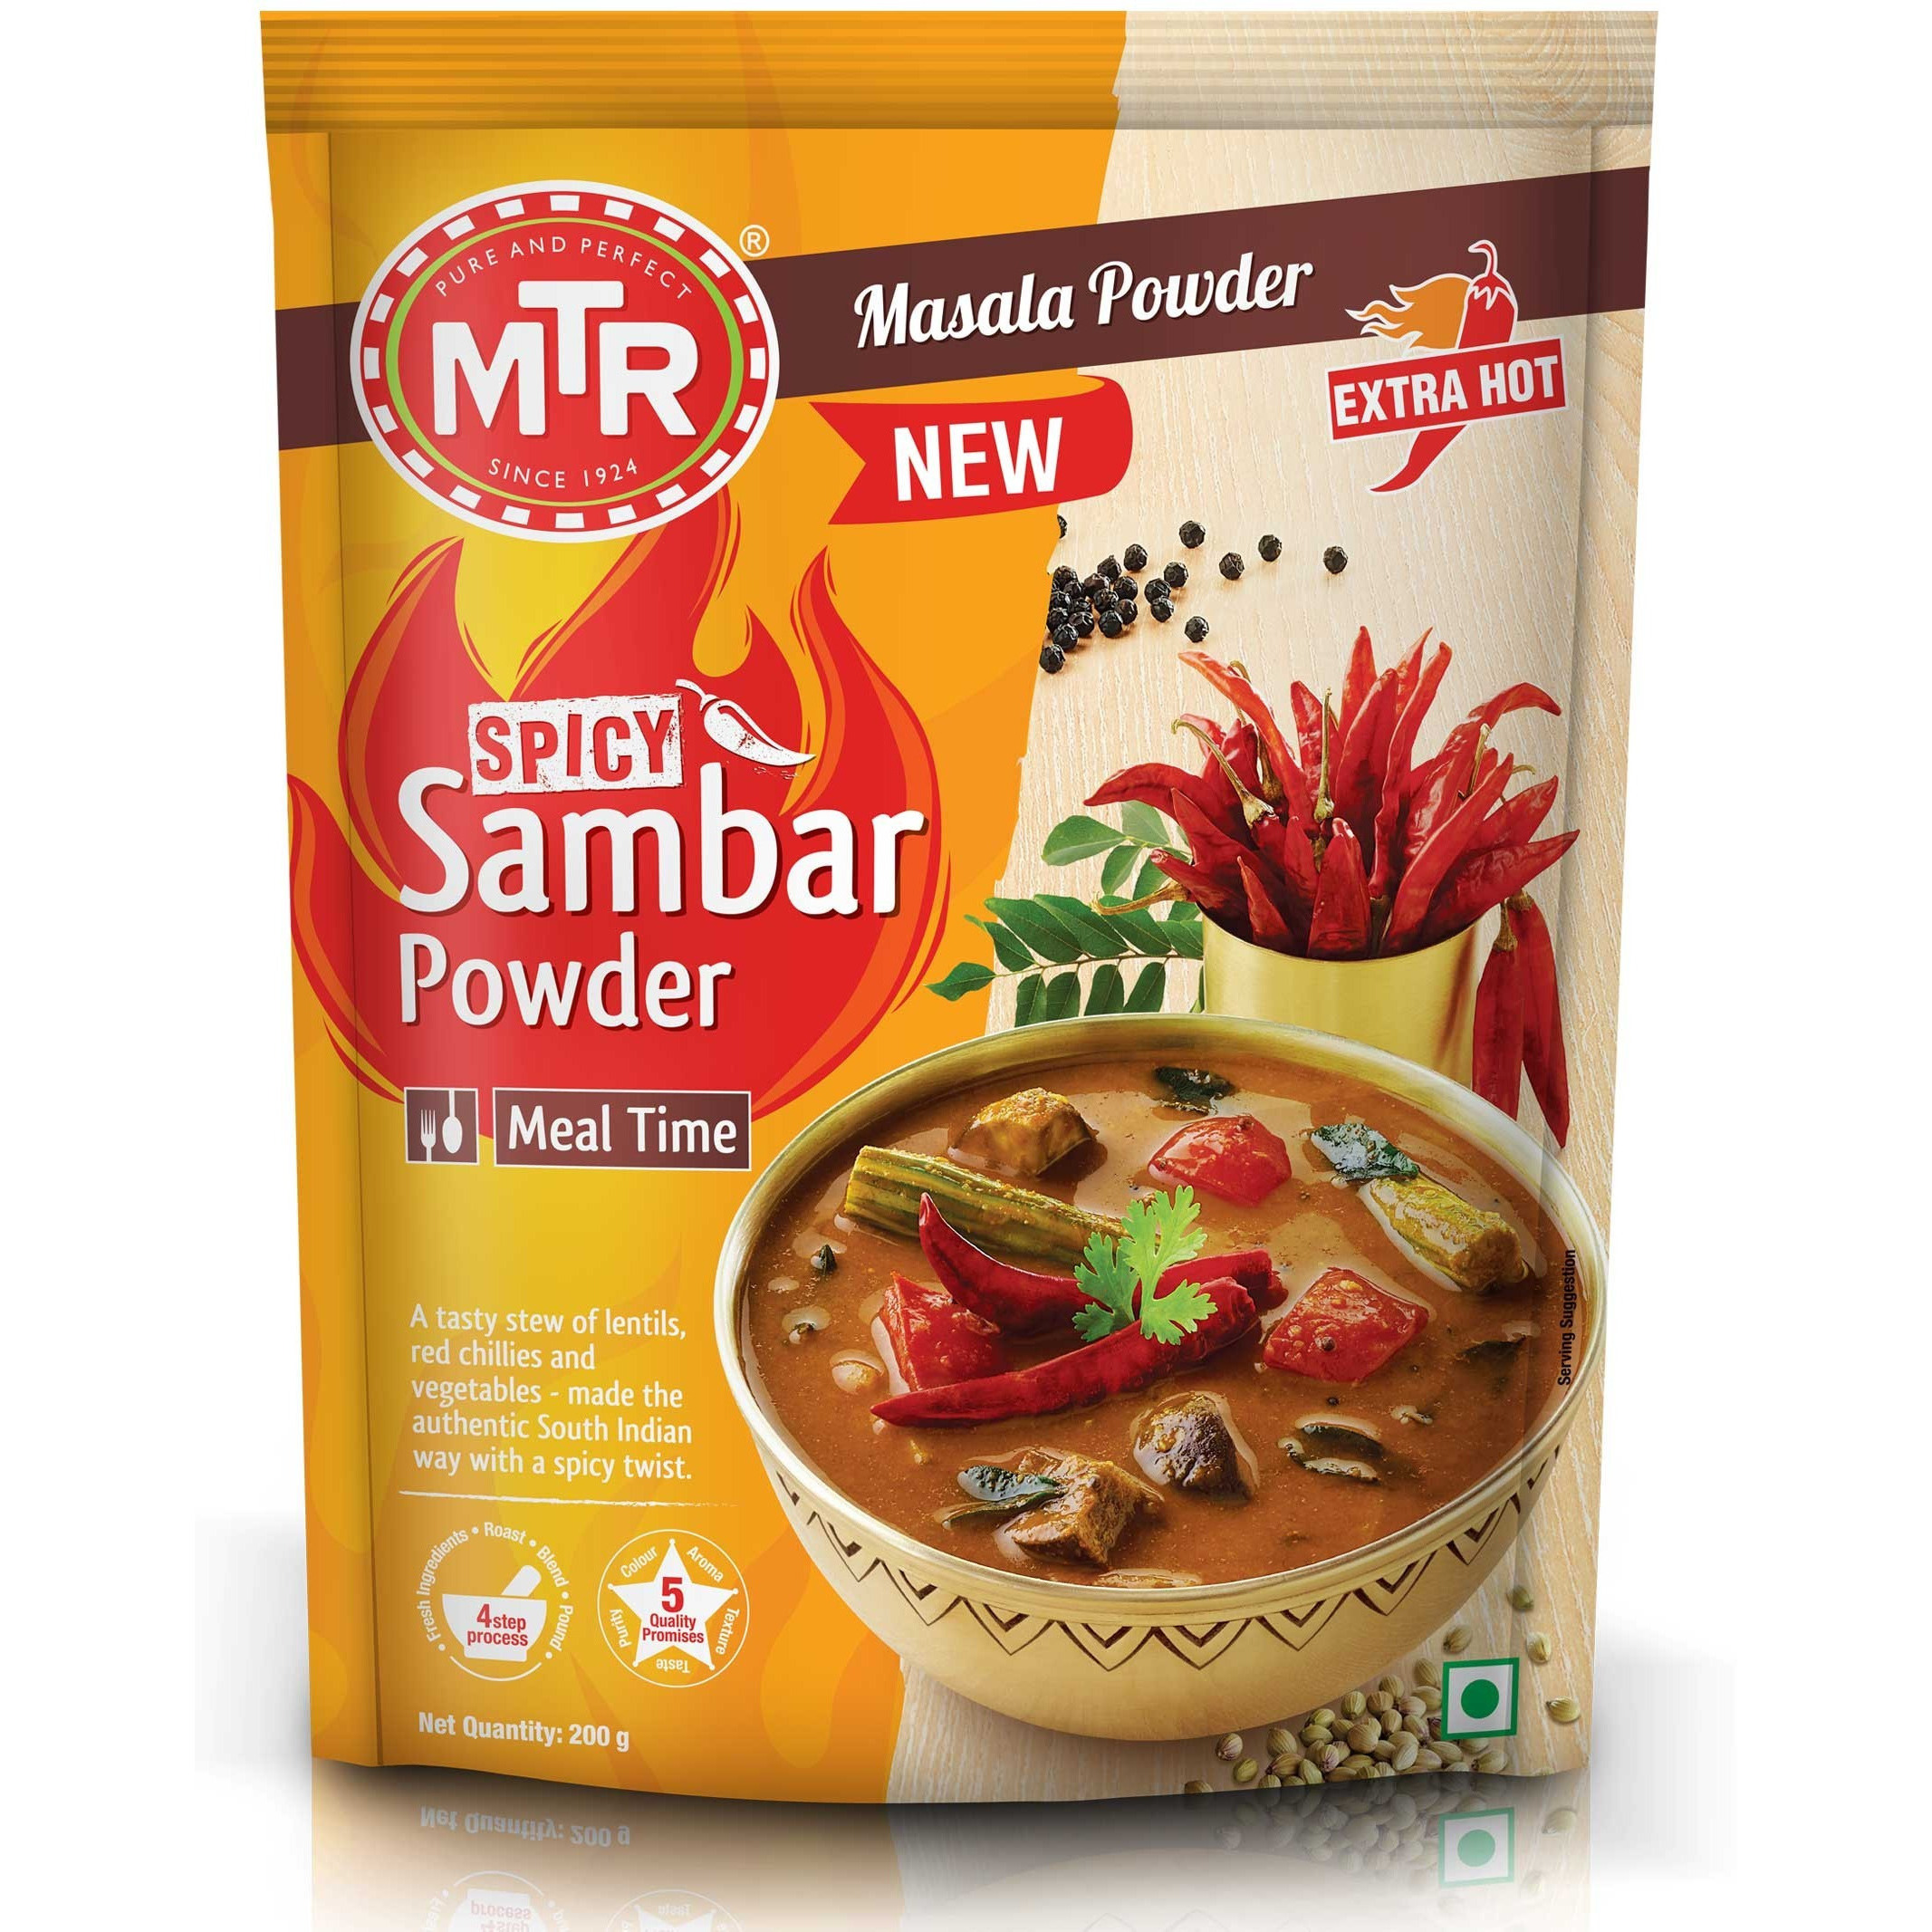 Pack of 2 - Mtr Spicy Sambar Powder Extra Hot - 100 Gm (3.5 Oz)